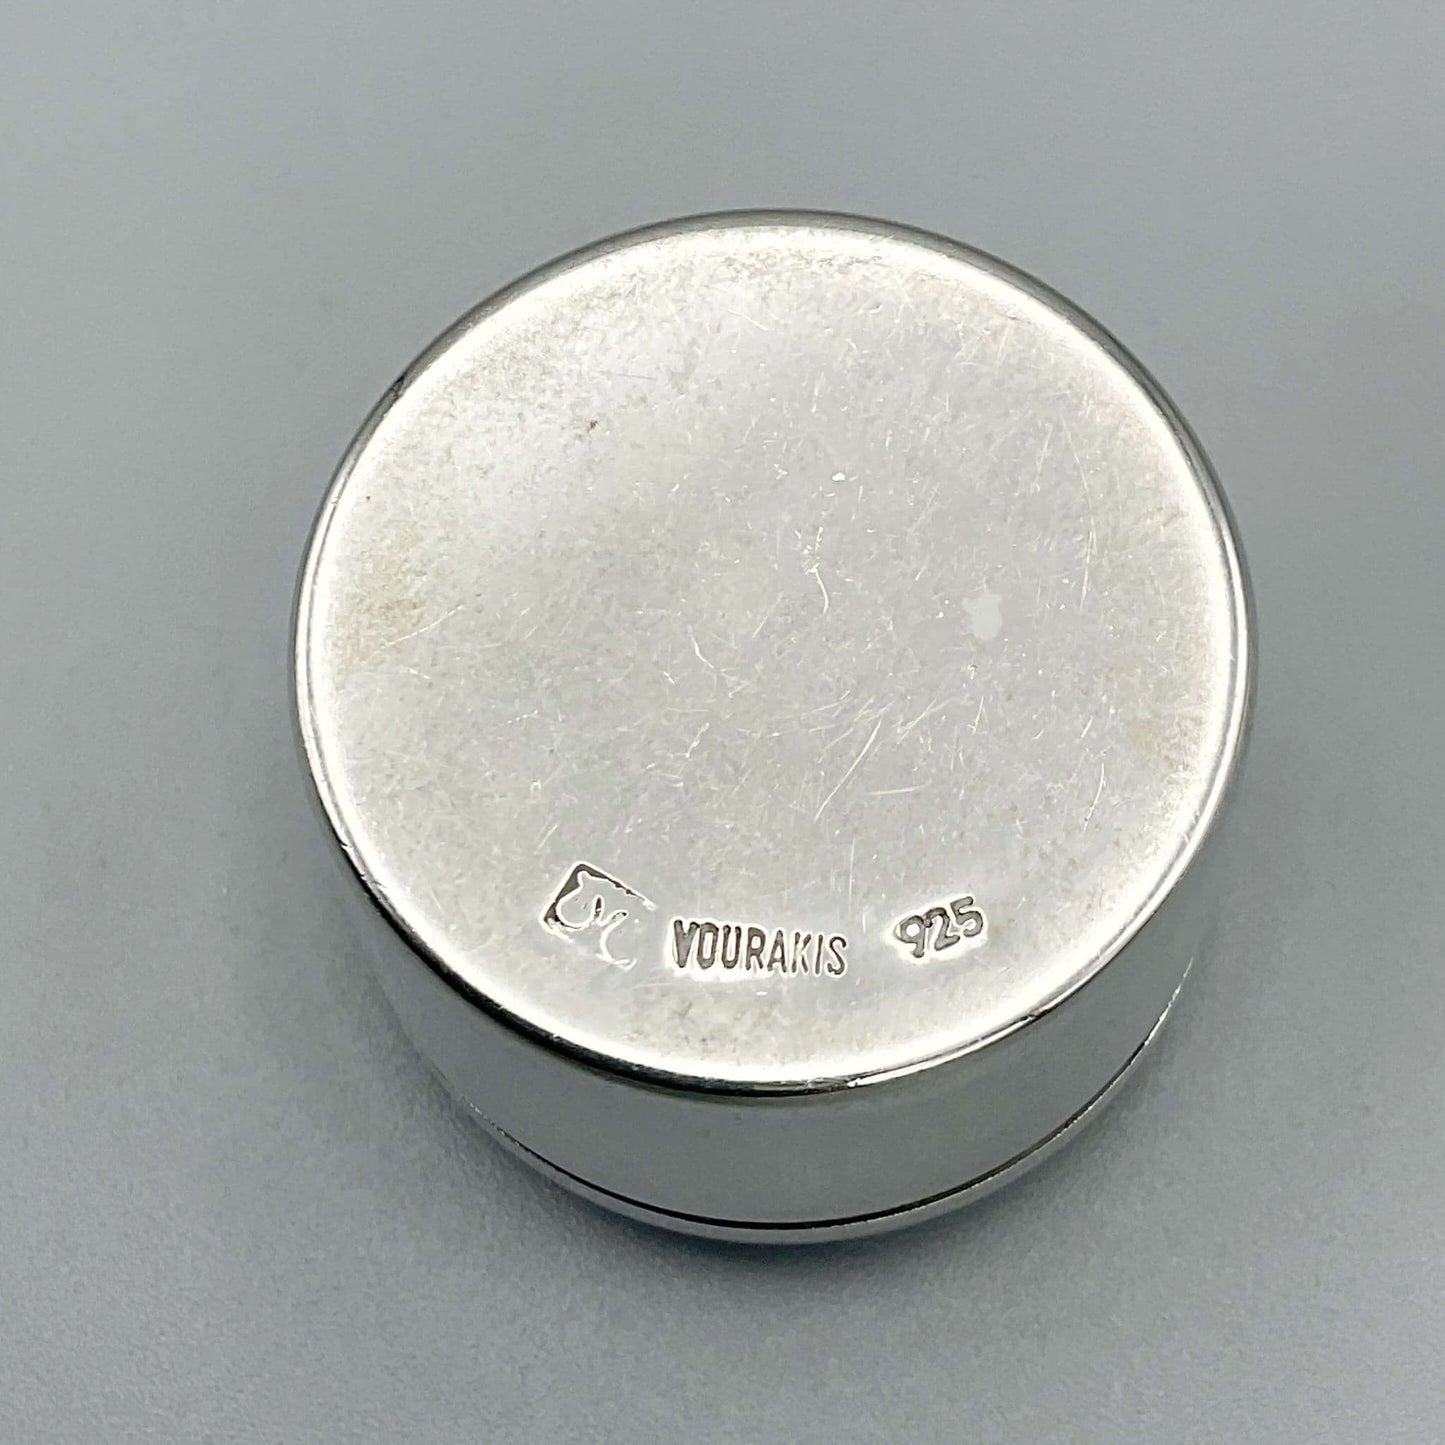 Greek Sterling Silver Pill Box, Vourakis